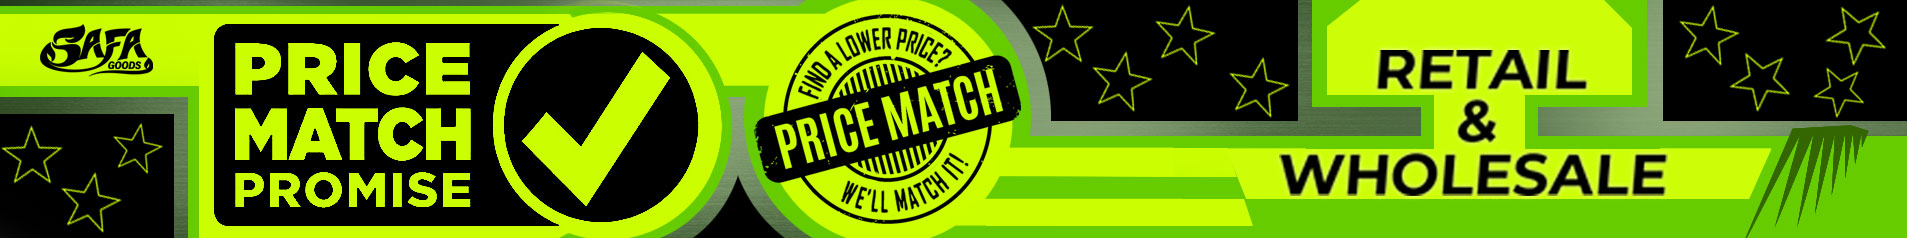 We Price Match!